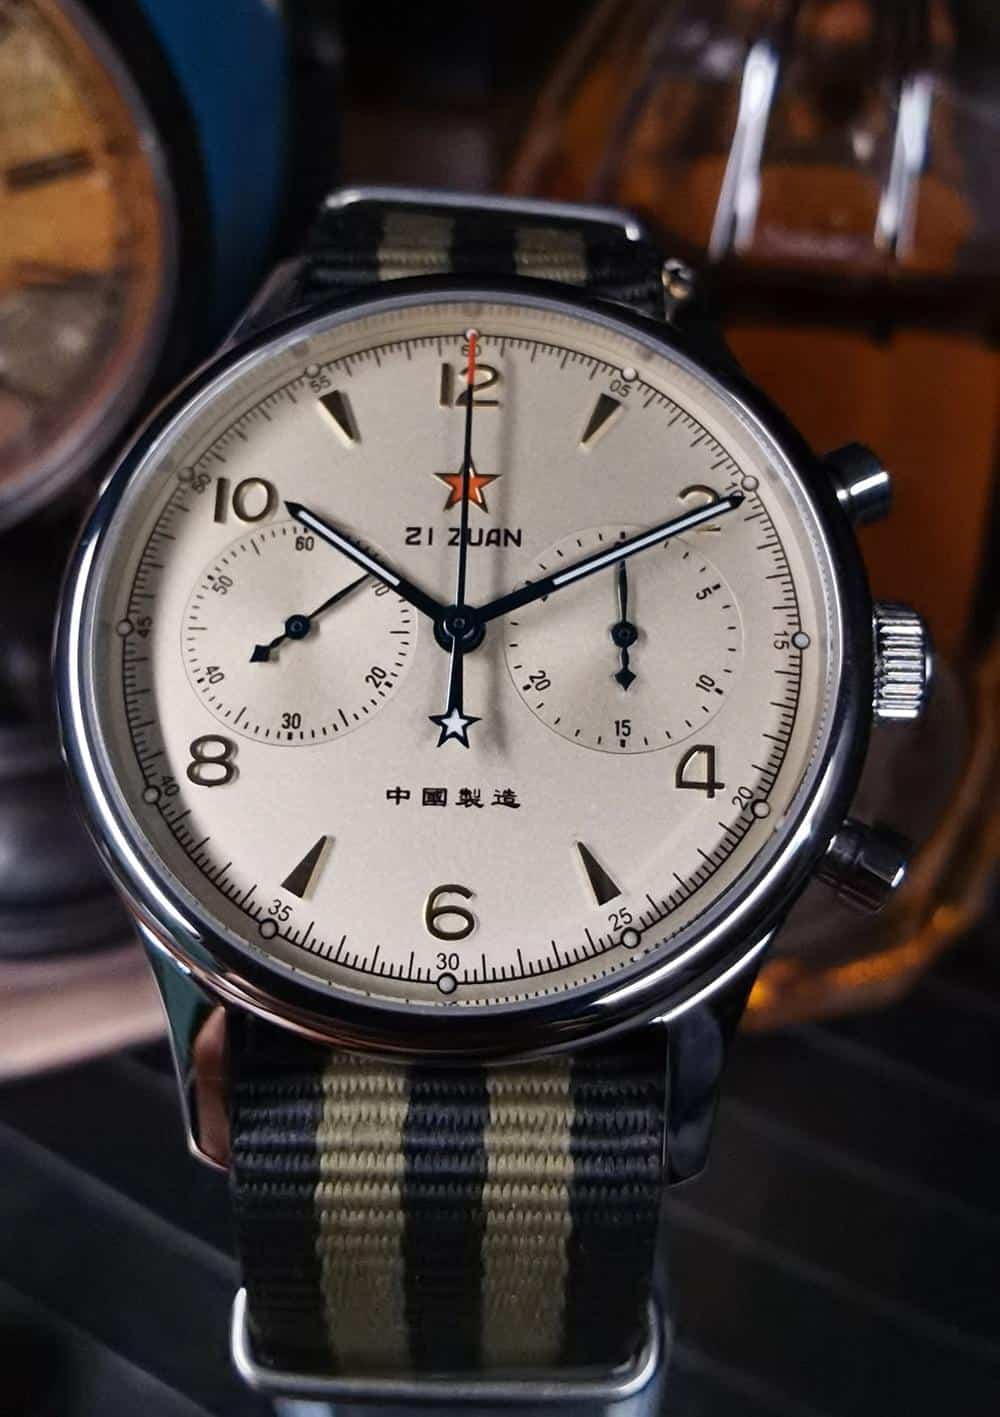 Men's Sport Watches Sapphire Mechanical Military Watch for Men Pilot Mens Chronograph Seagull 1963 st1901 Movement Watch Luxury